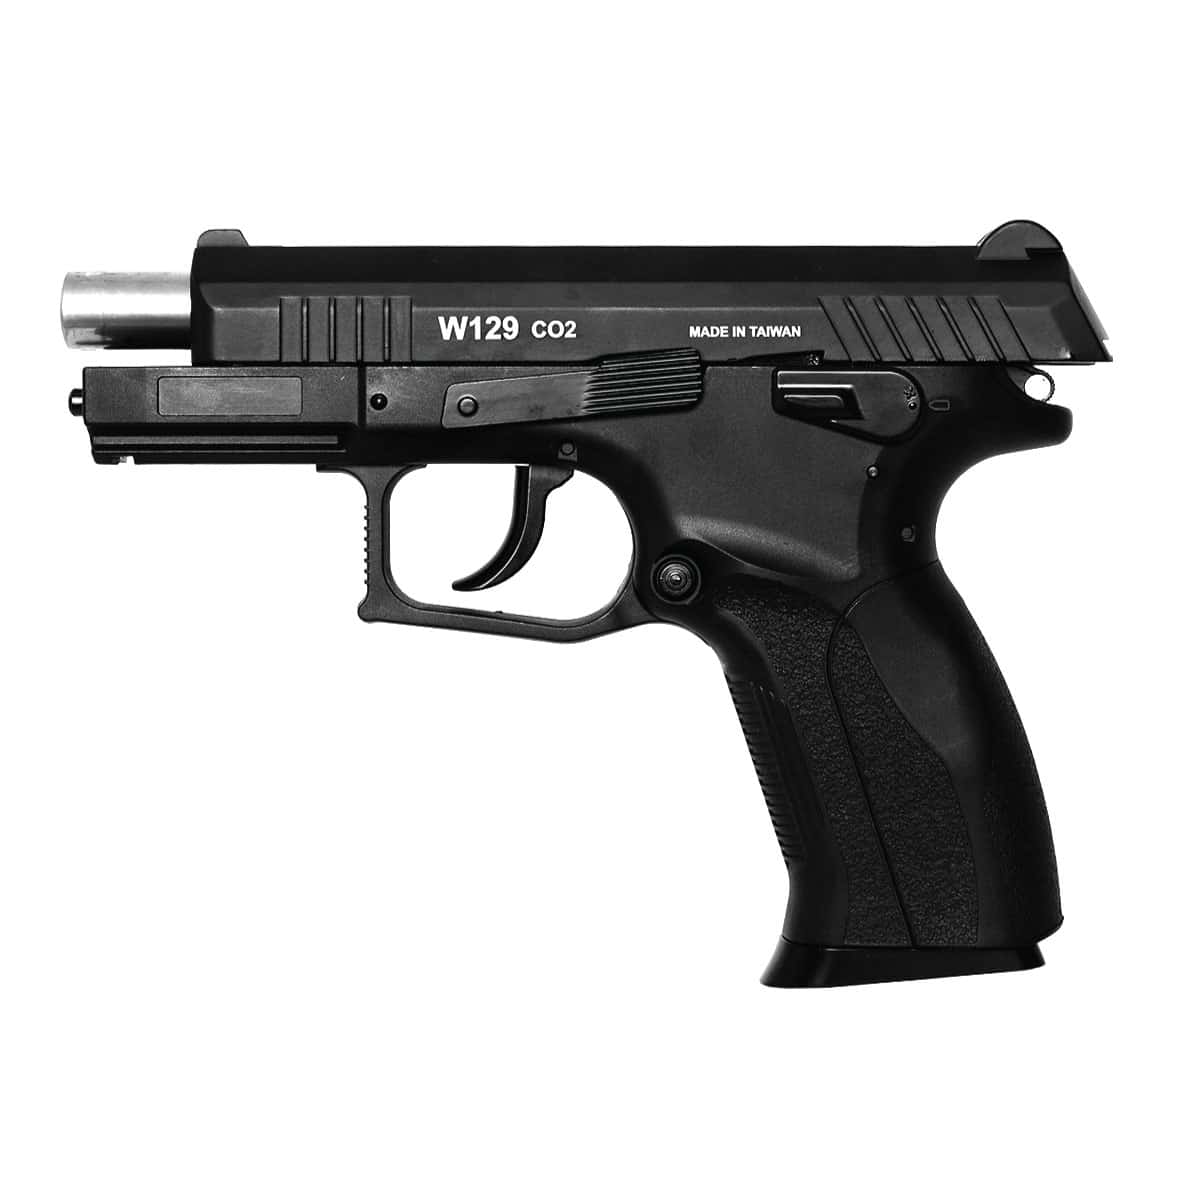 Pistola Airgun CZ300 W129 Slide Metal Co2 4,5mm Super Kit